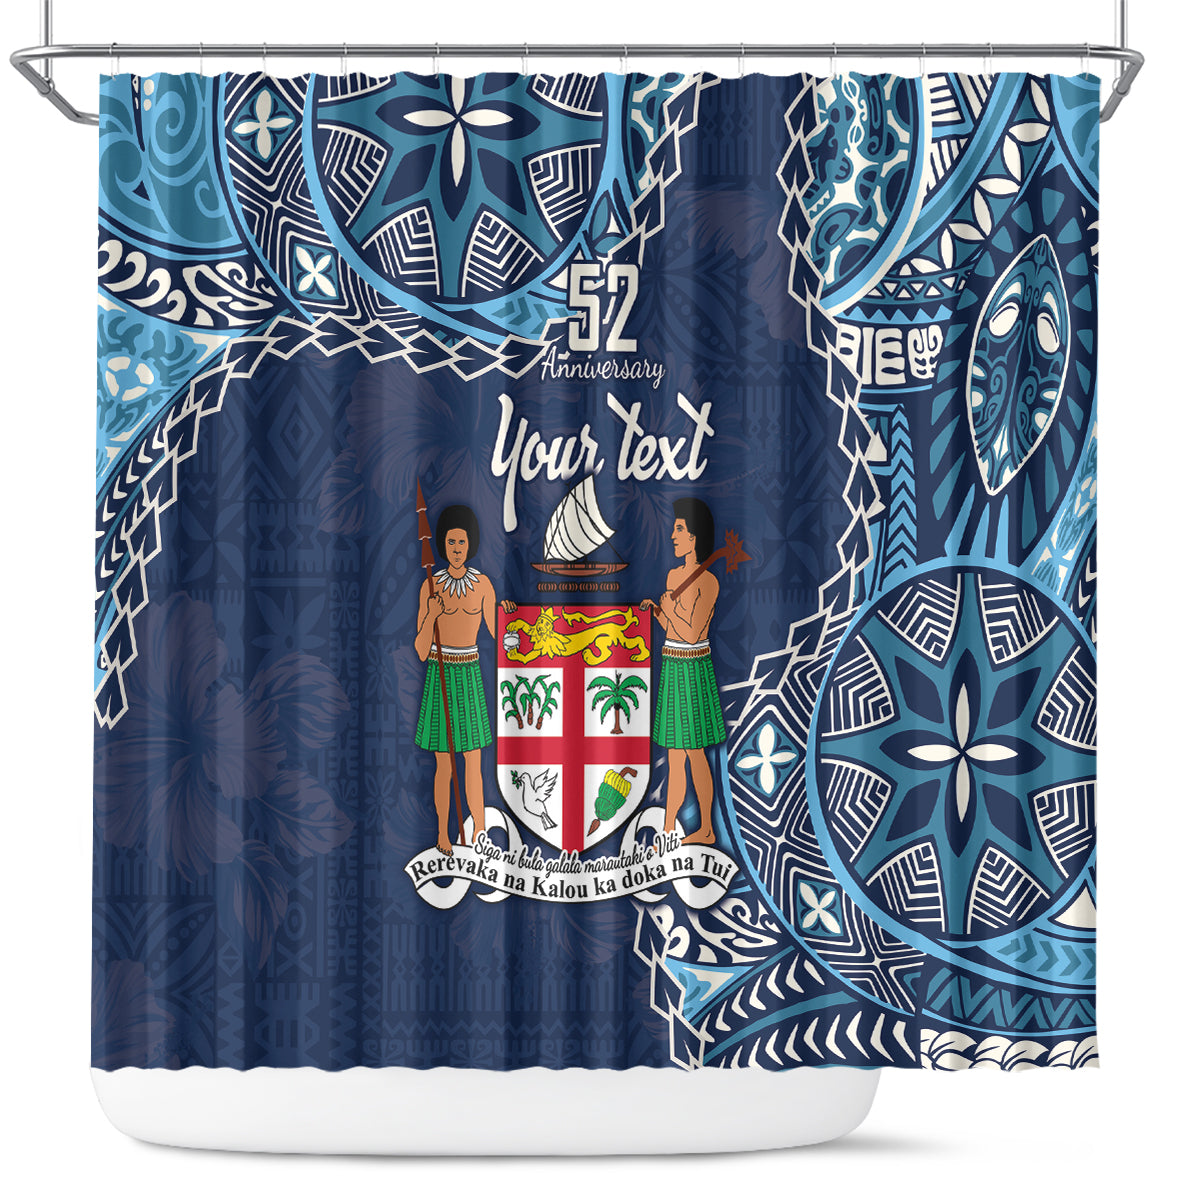 Personalised Fiji 54th Anniversary Shower Curtain Siga Ni Bula Galala Marautaki O Viti